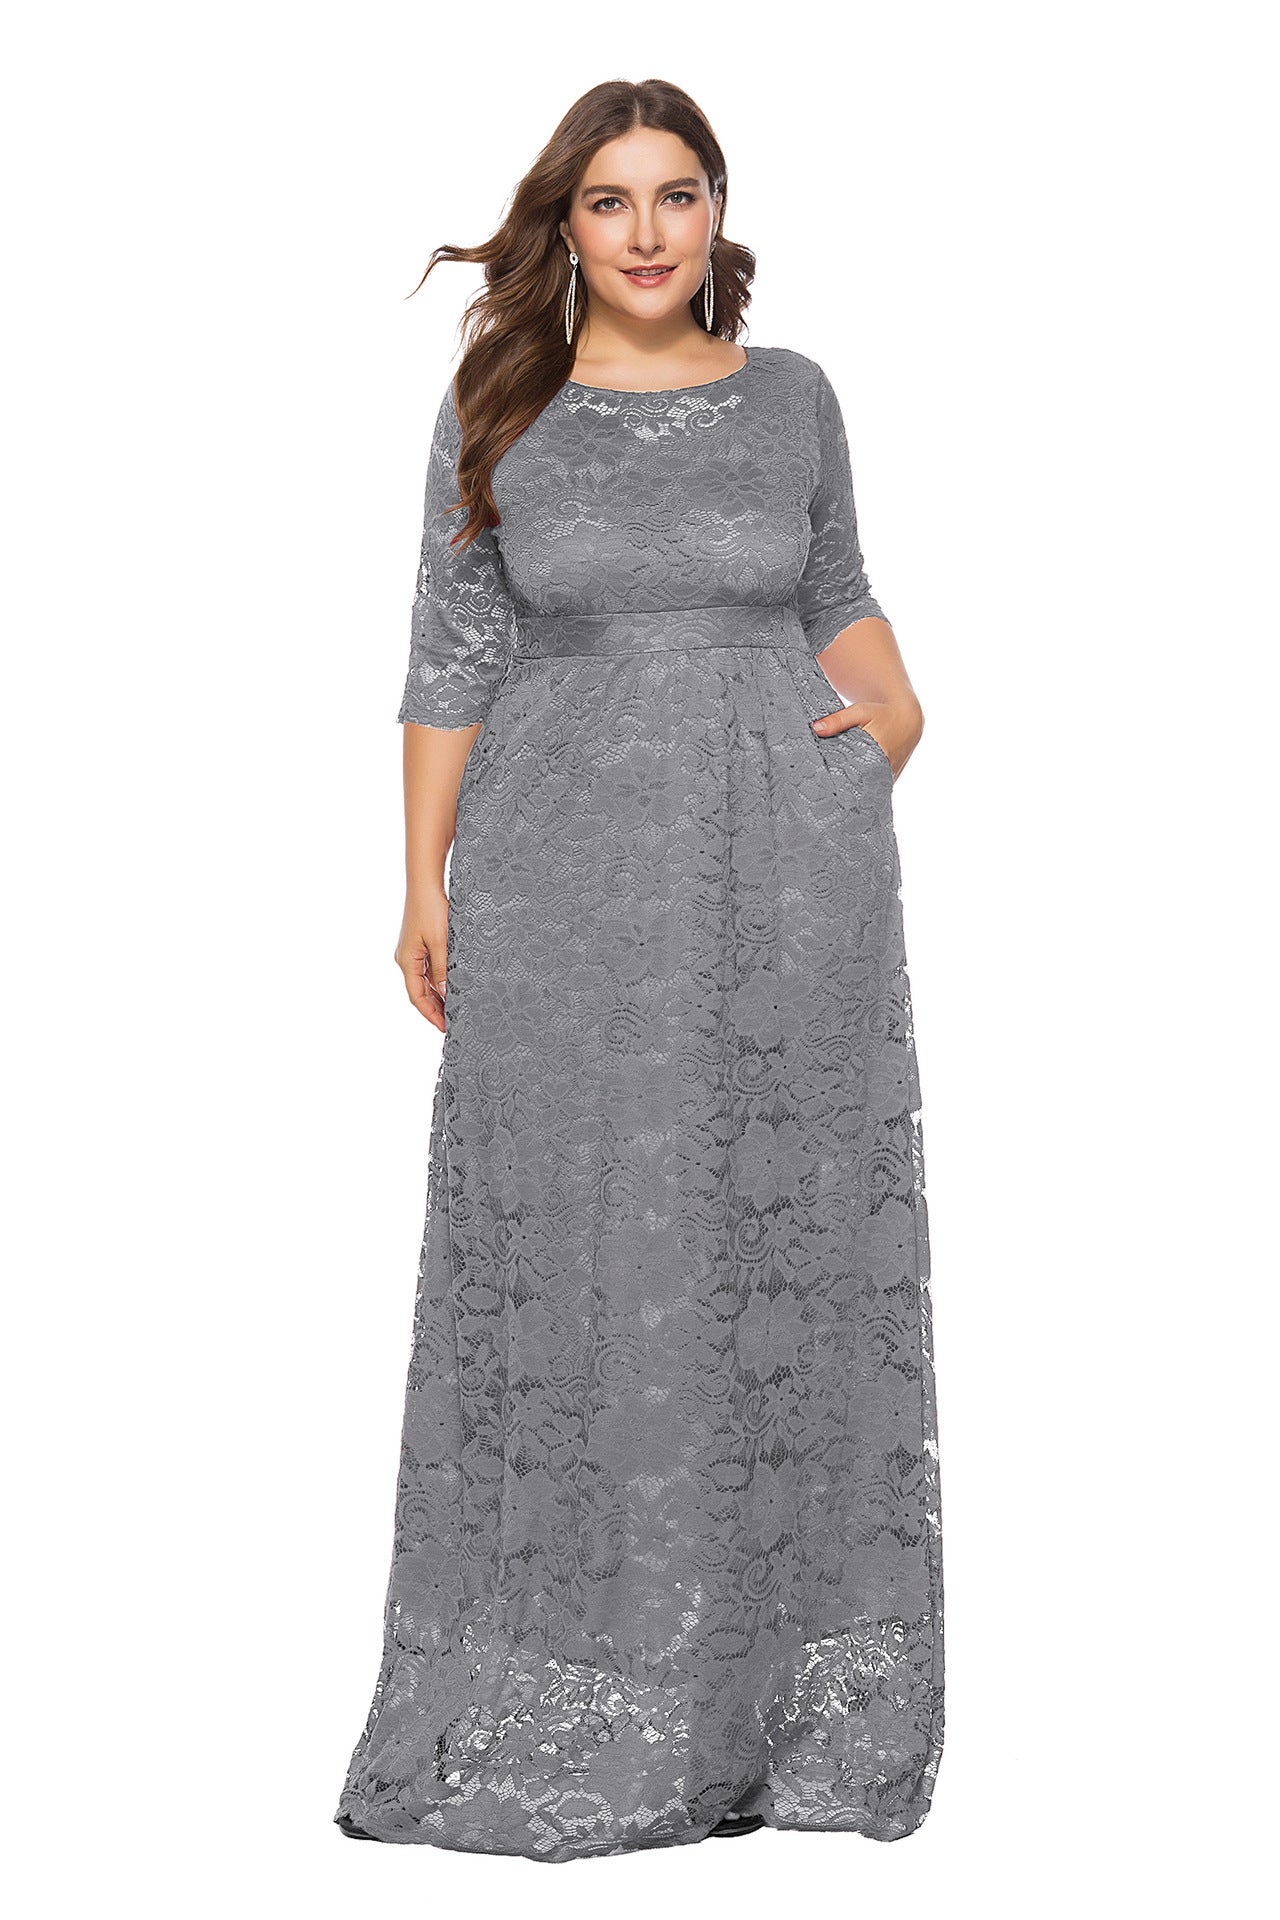 Plus Size Women New Hollow Lace Pocket Dress